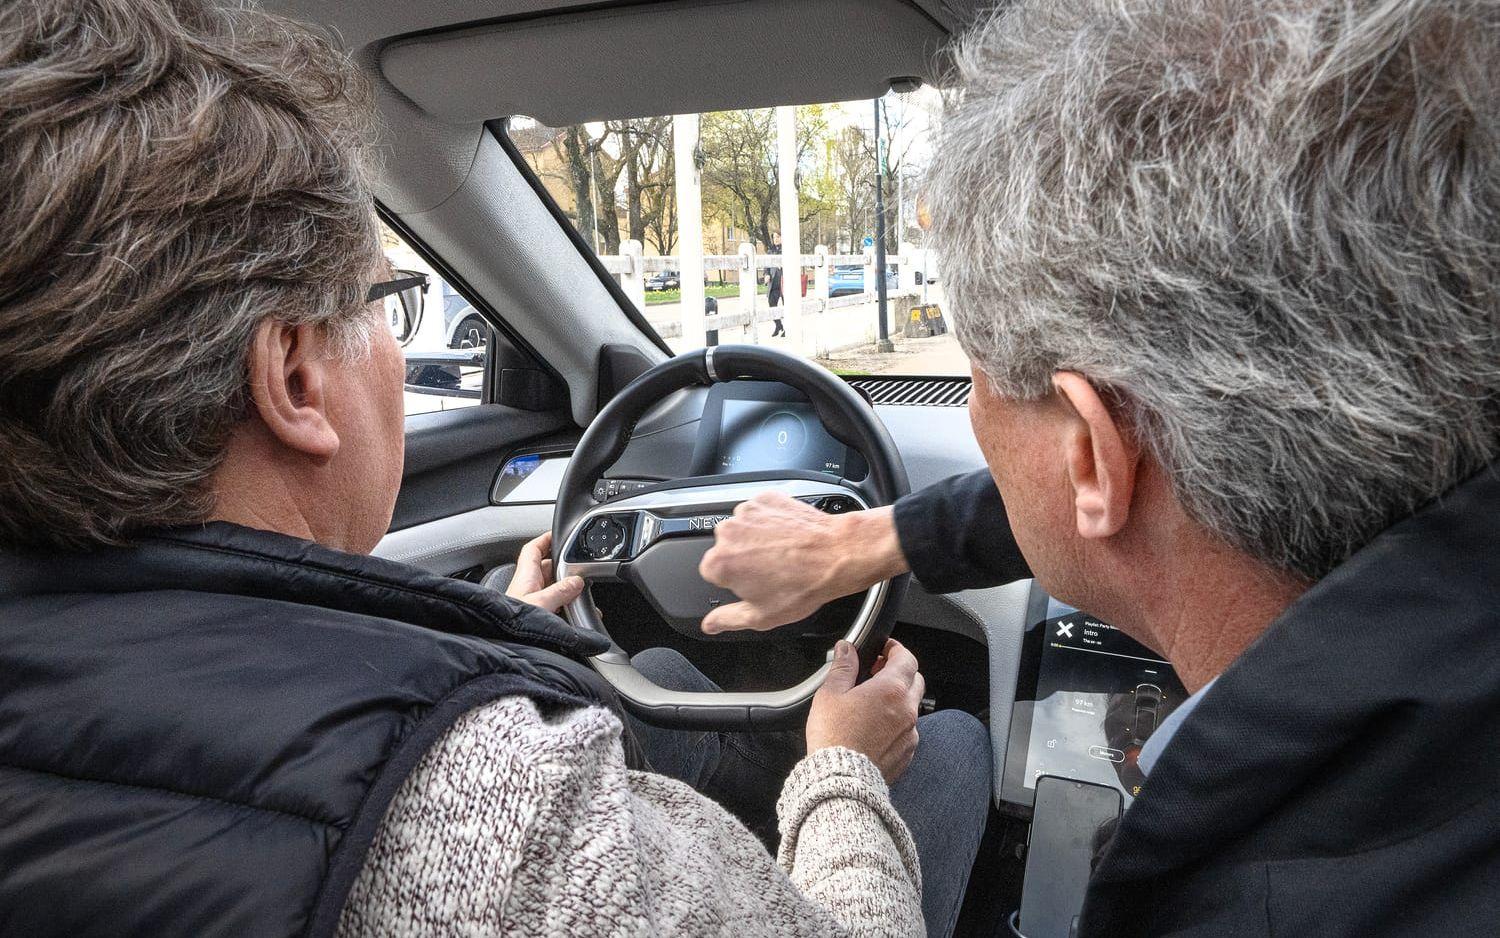 TTELA:s reporter Joachim Flodin testkör Nevs elbil Emily GT Electric tillsammans med projektchefen Peter Dahl.